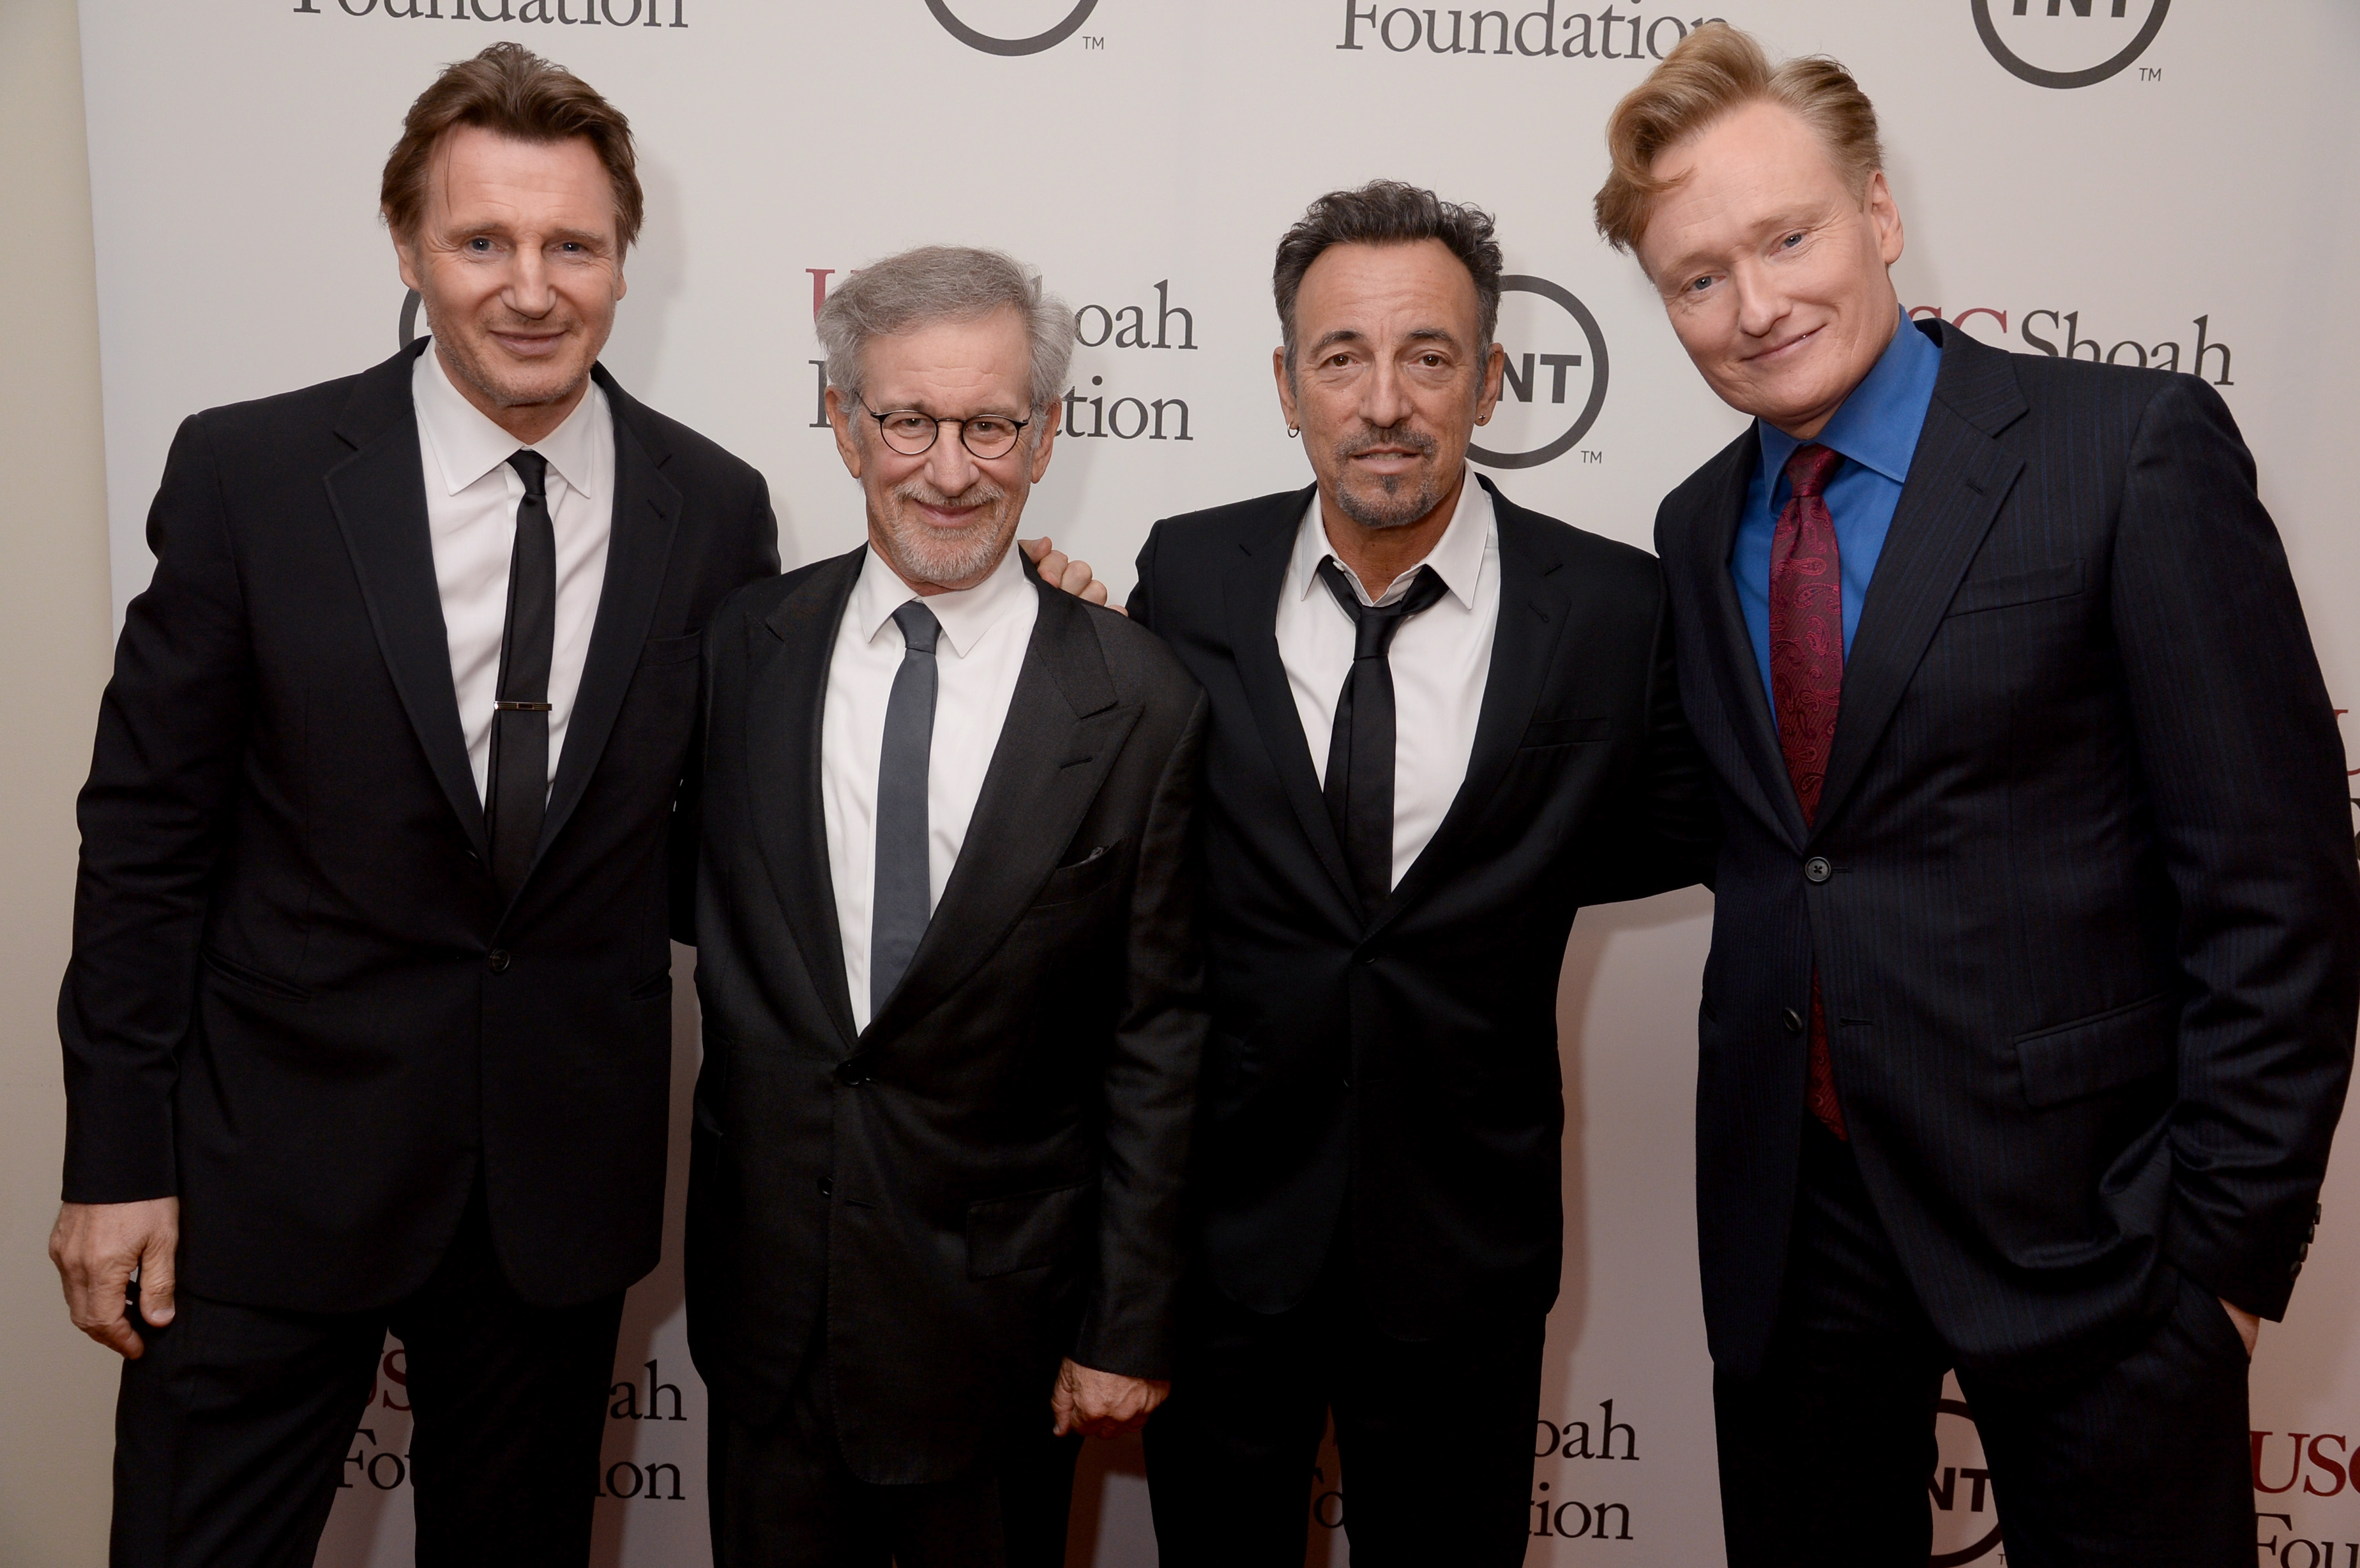 L-R: Liam Neeson, Steven Spielberg, Bruce Springsteen, Conan O'Brien